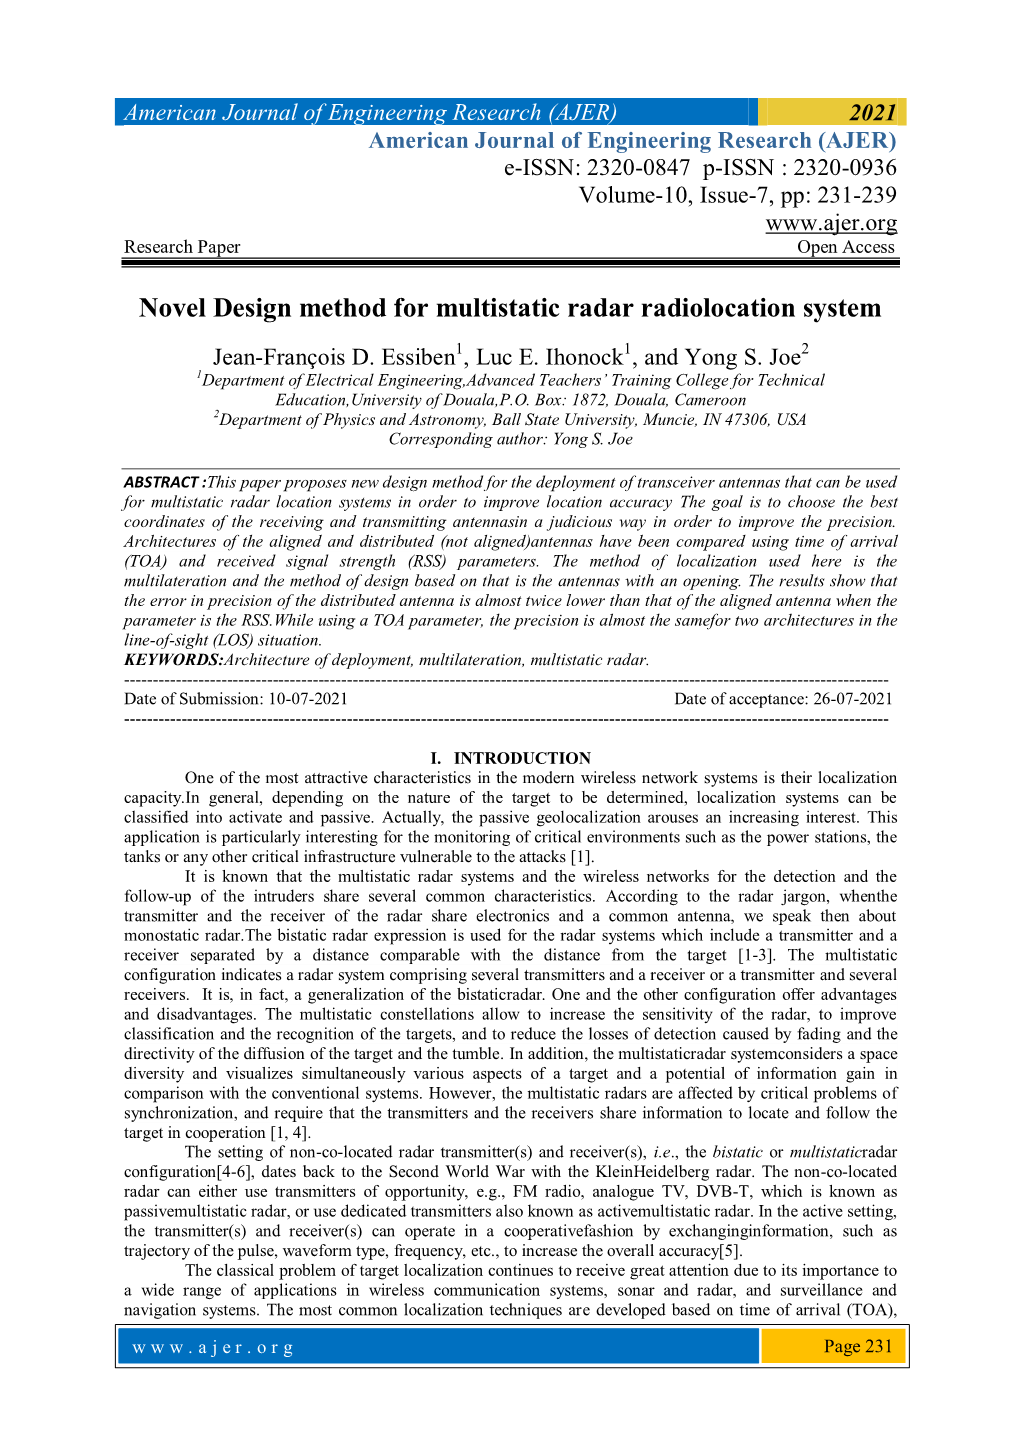 Novel Design Method for Multistatic Radar Radiolocation System